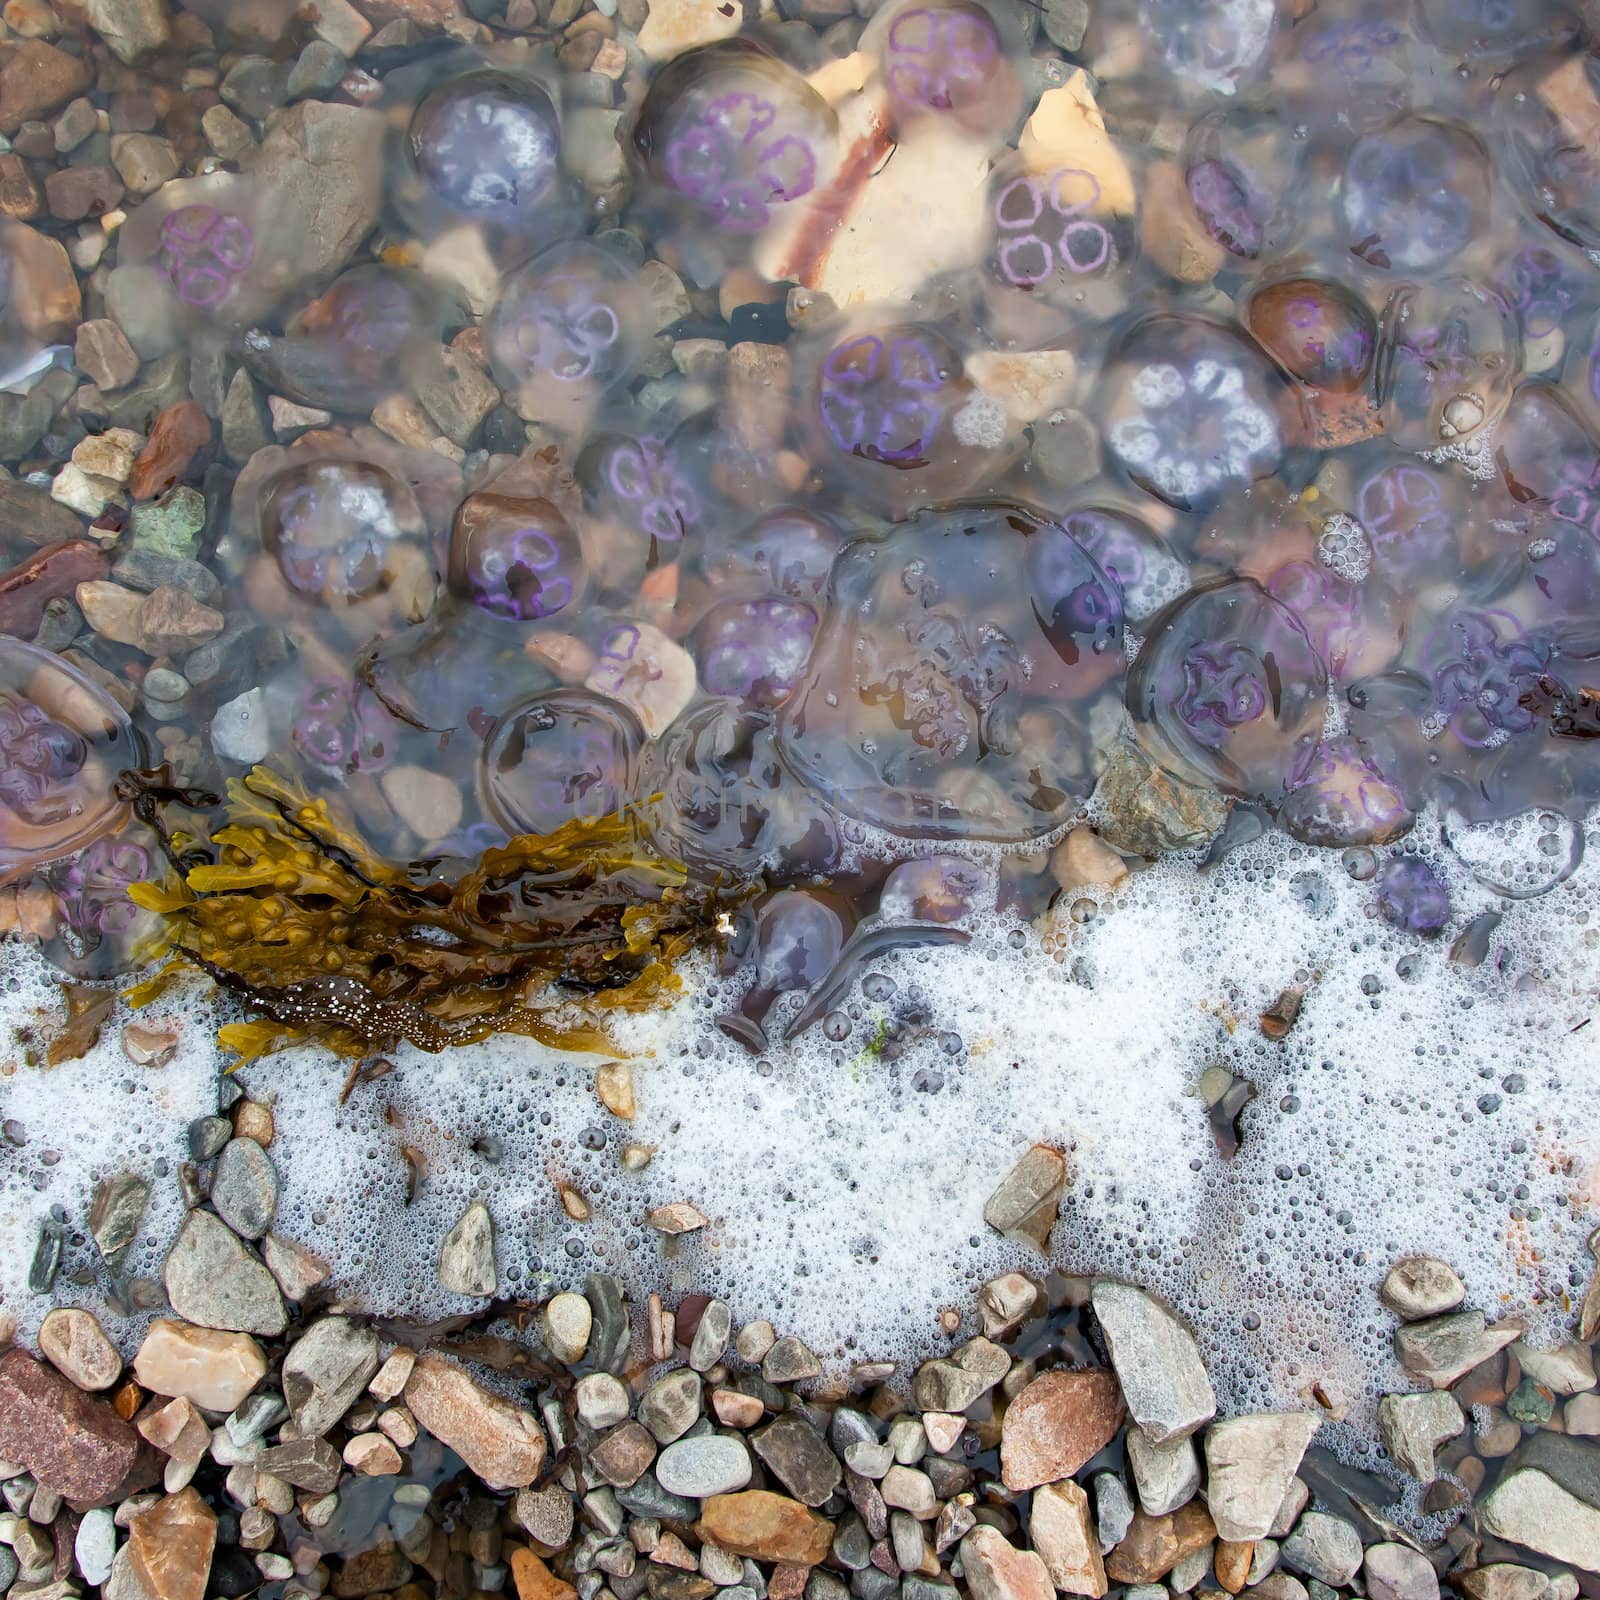 Small jellyfish washing up on a beach by michaklootwijk